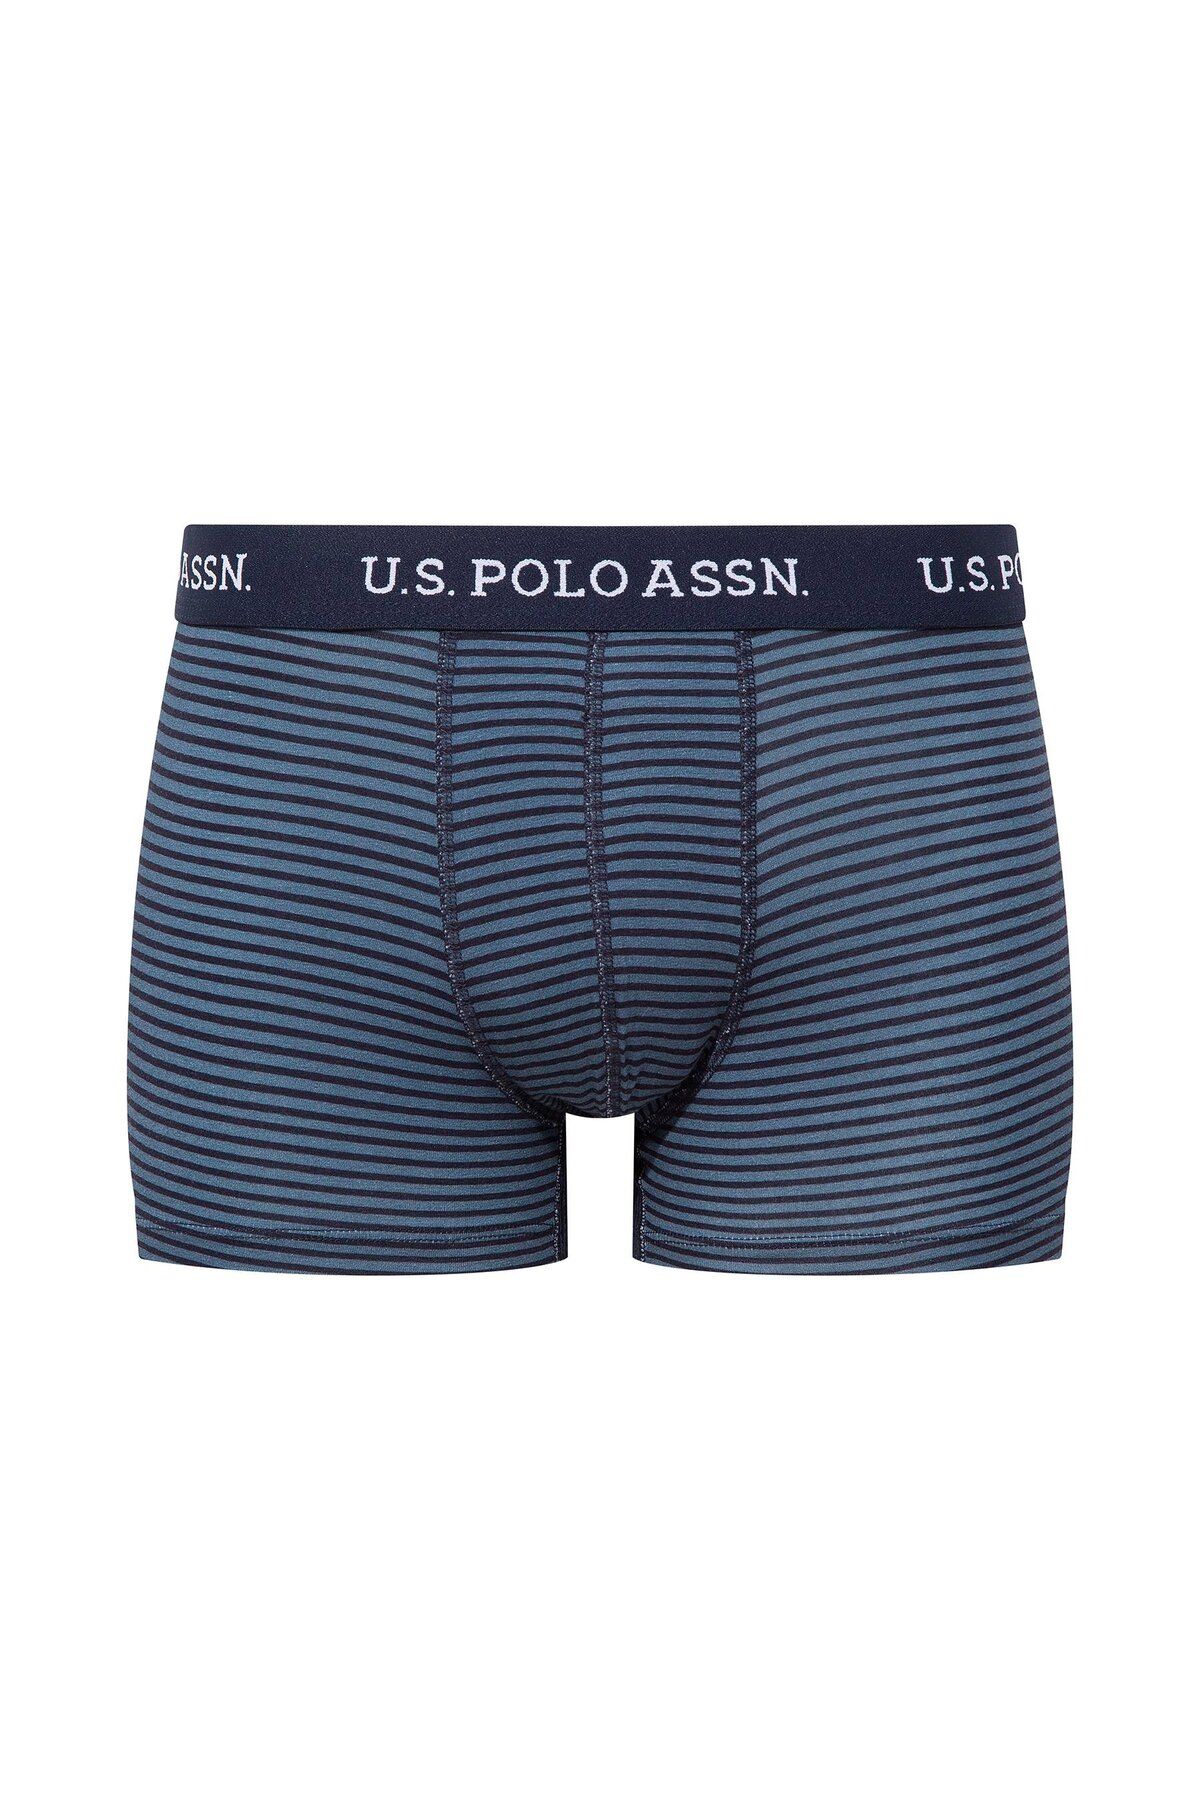 U.S. Polo Assn. Erkek Karışık Renkli Boxer